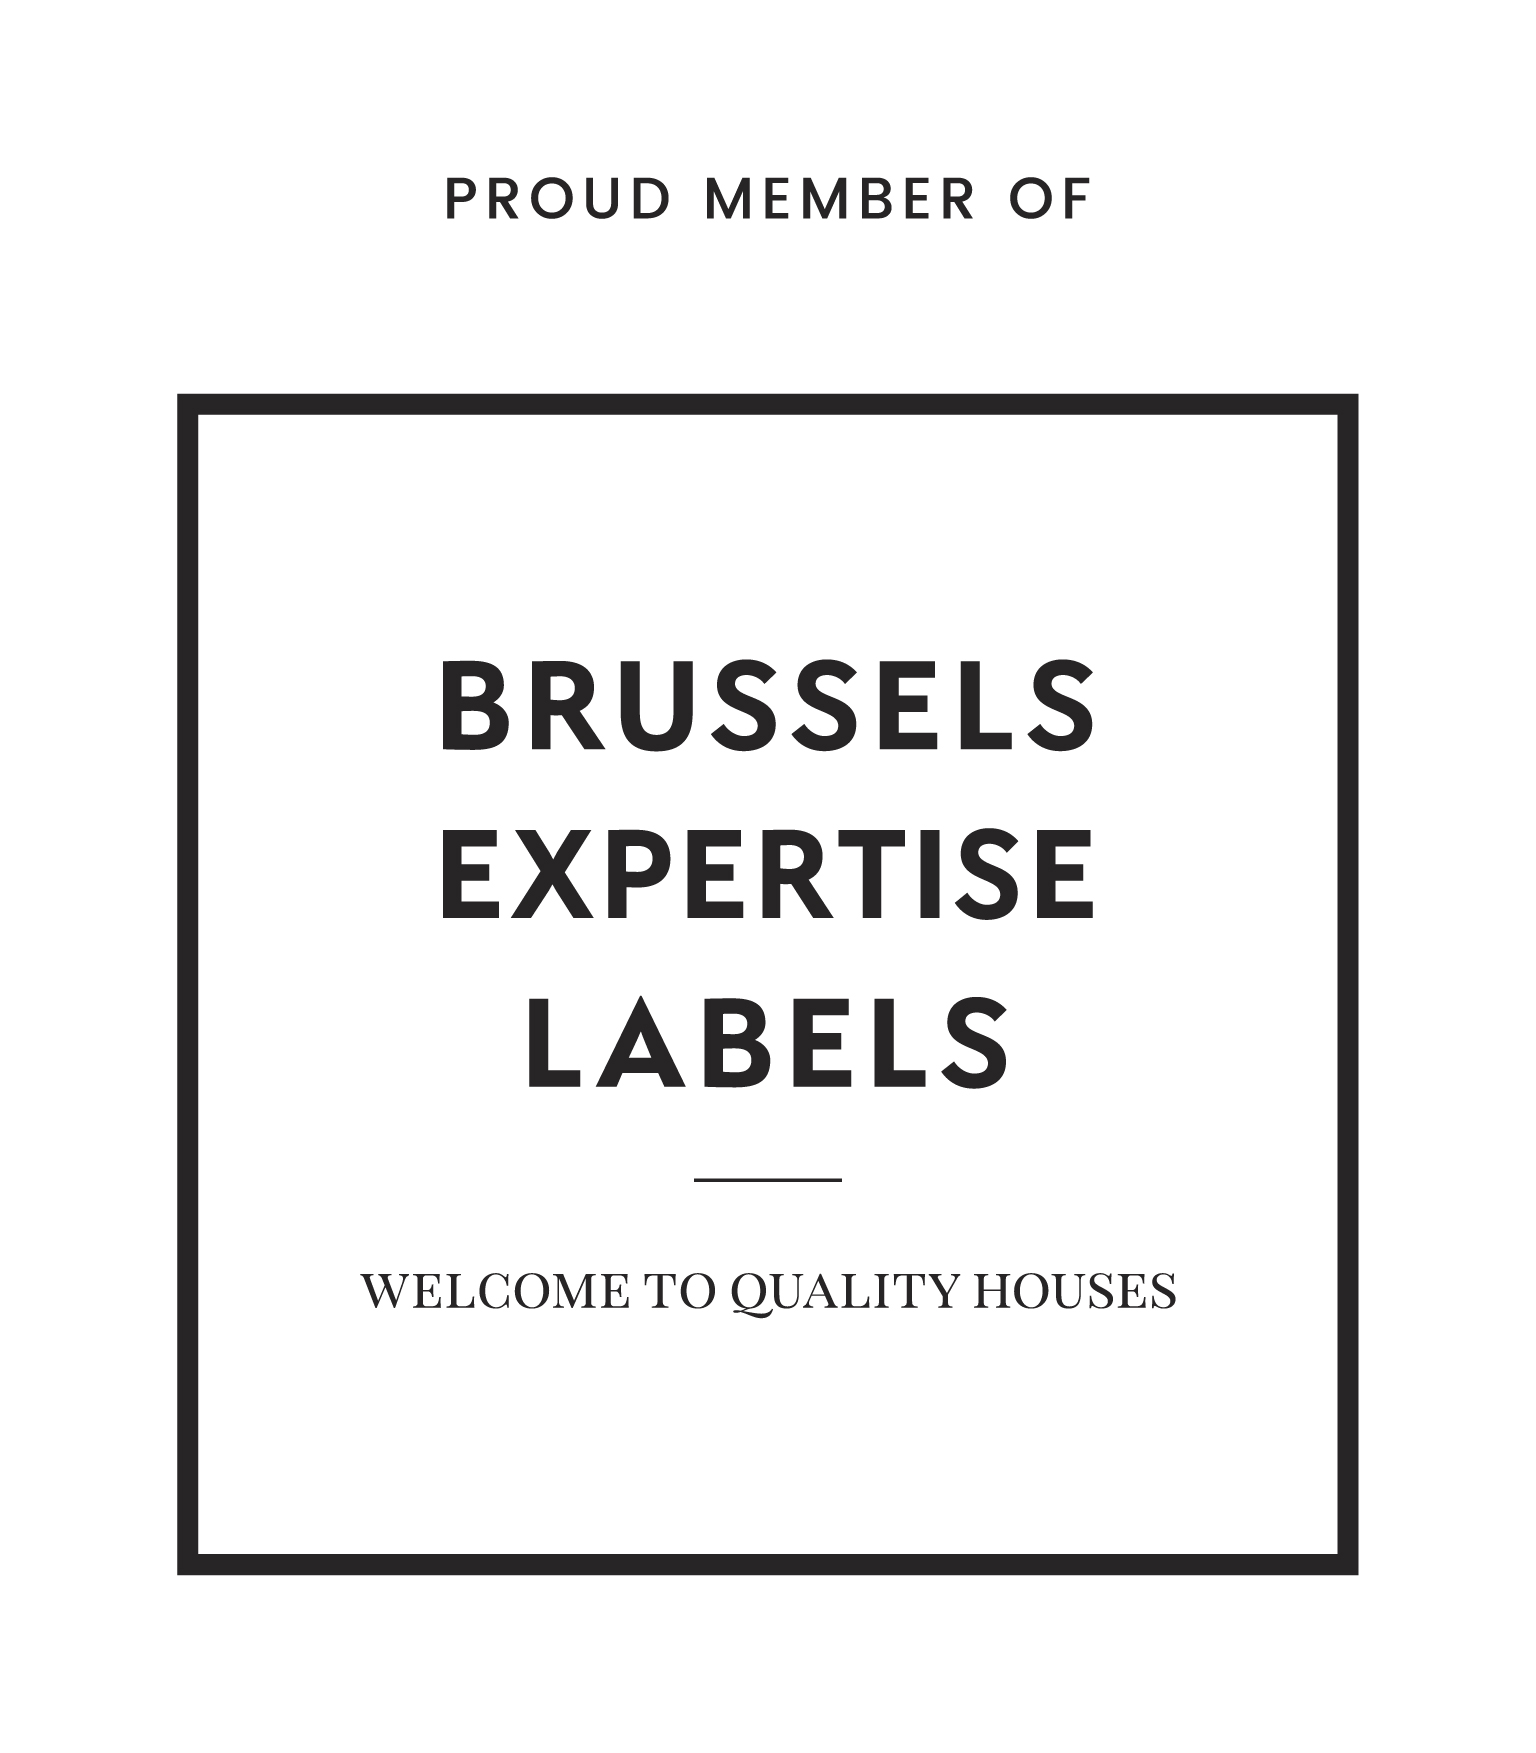 Brussels experties labels